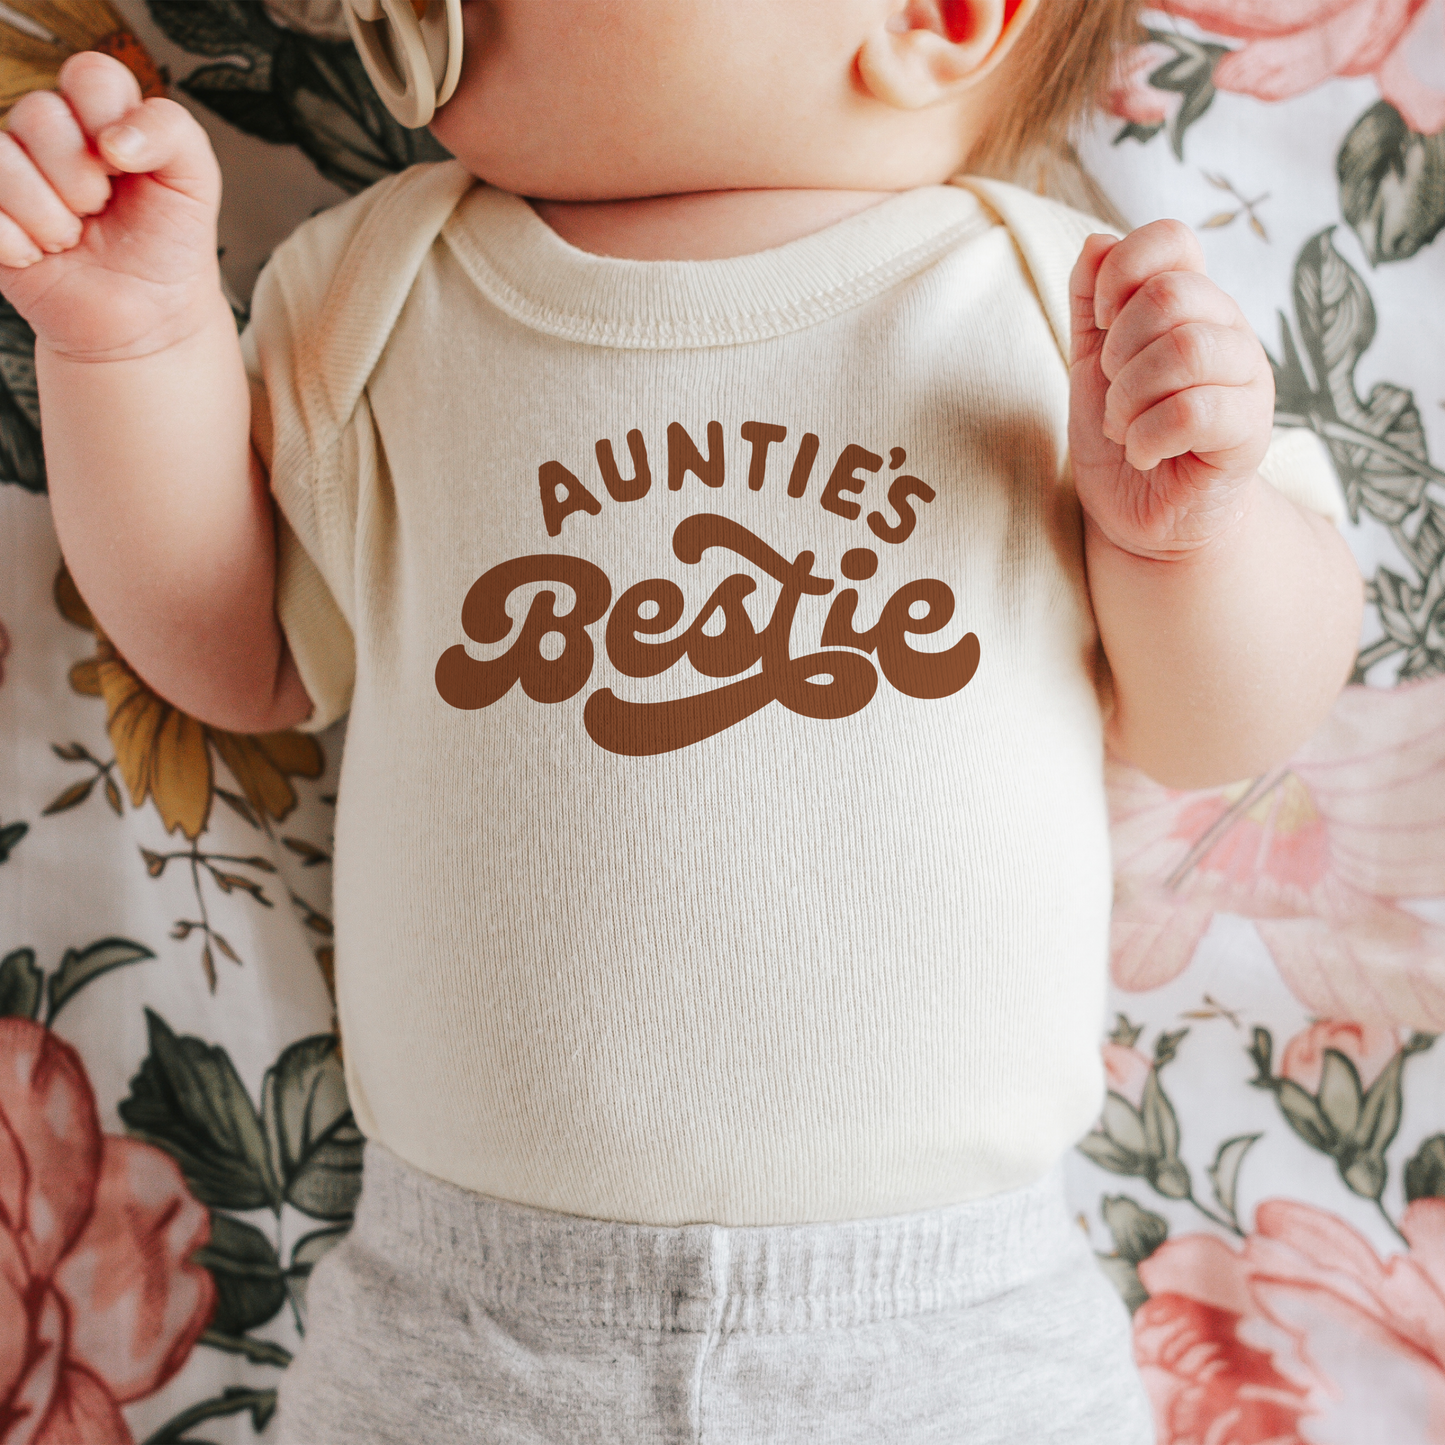 Auntie’s bestie baby one piece